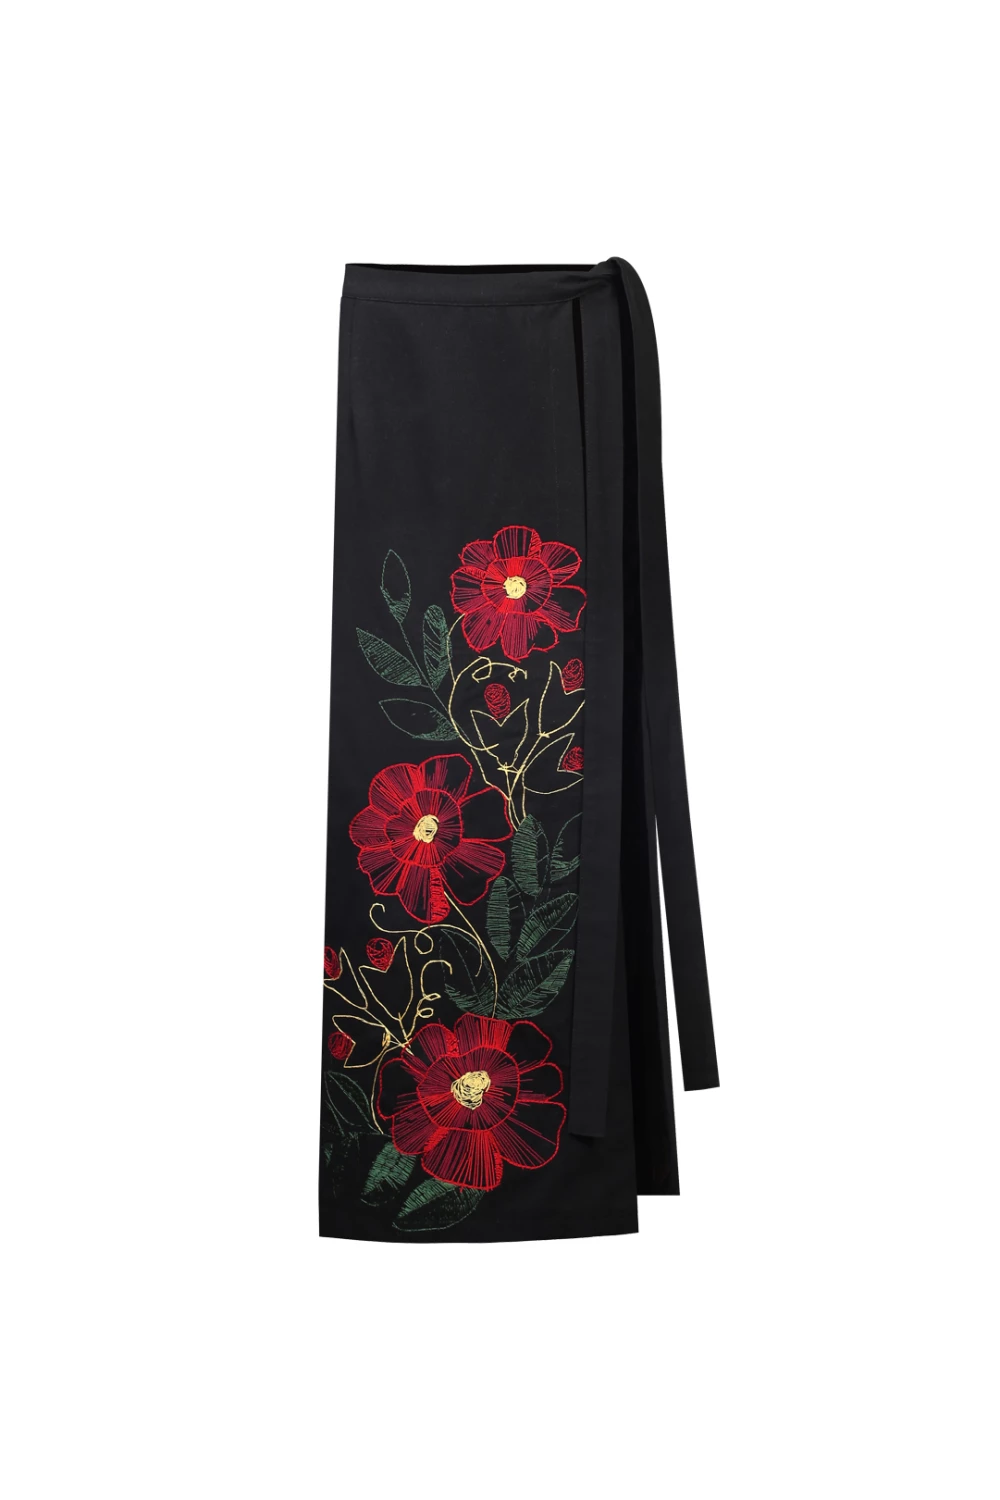 skirt "kvity" in black color